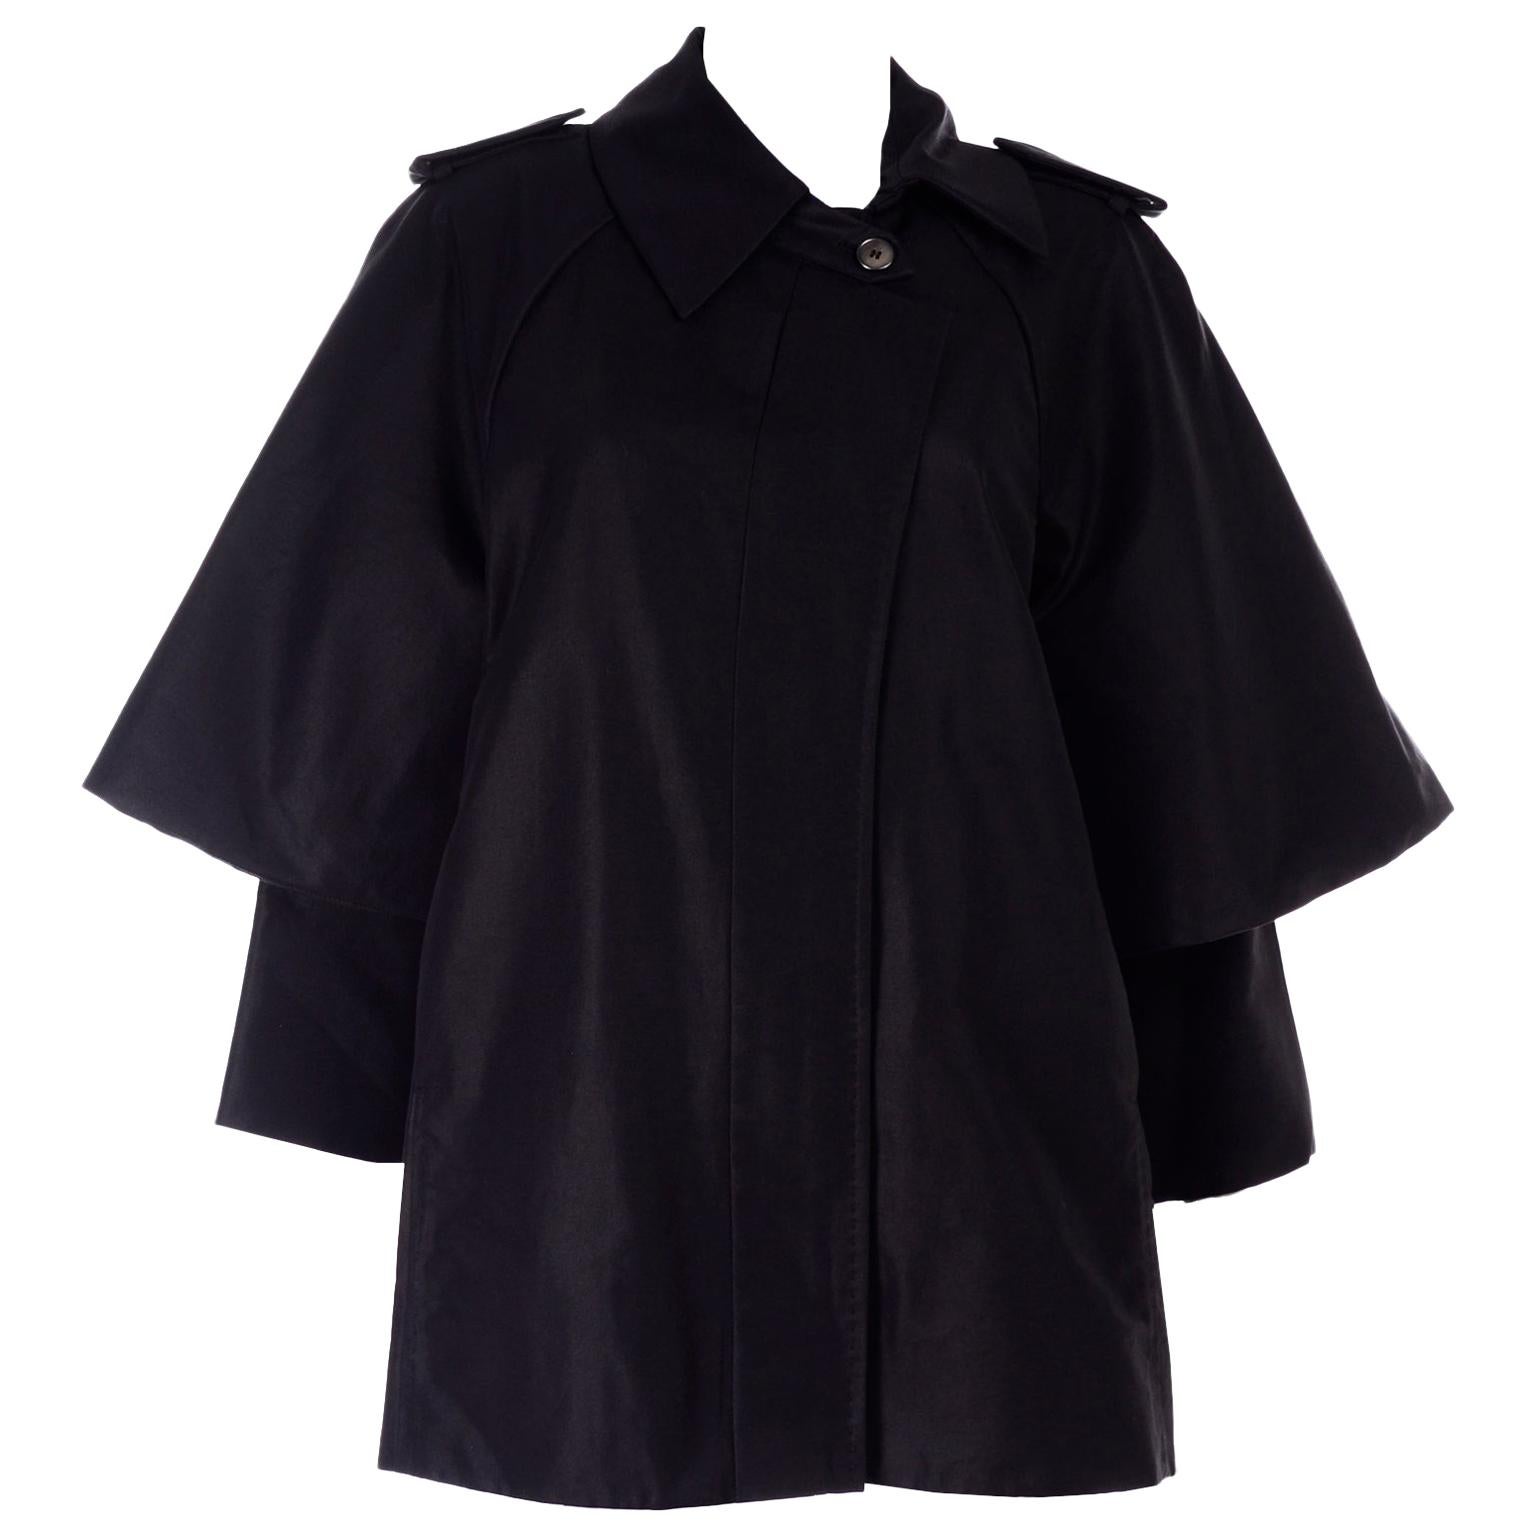 Sportmax Coat Italy Black Raincoat With Capelet